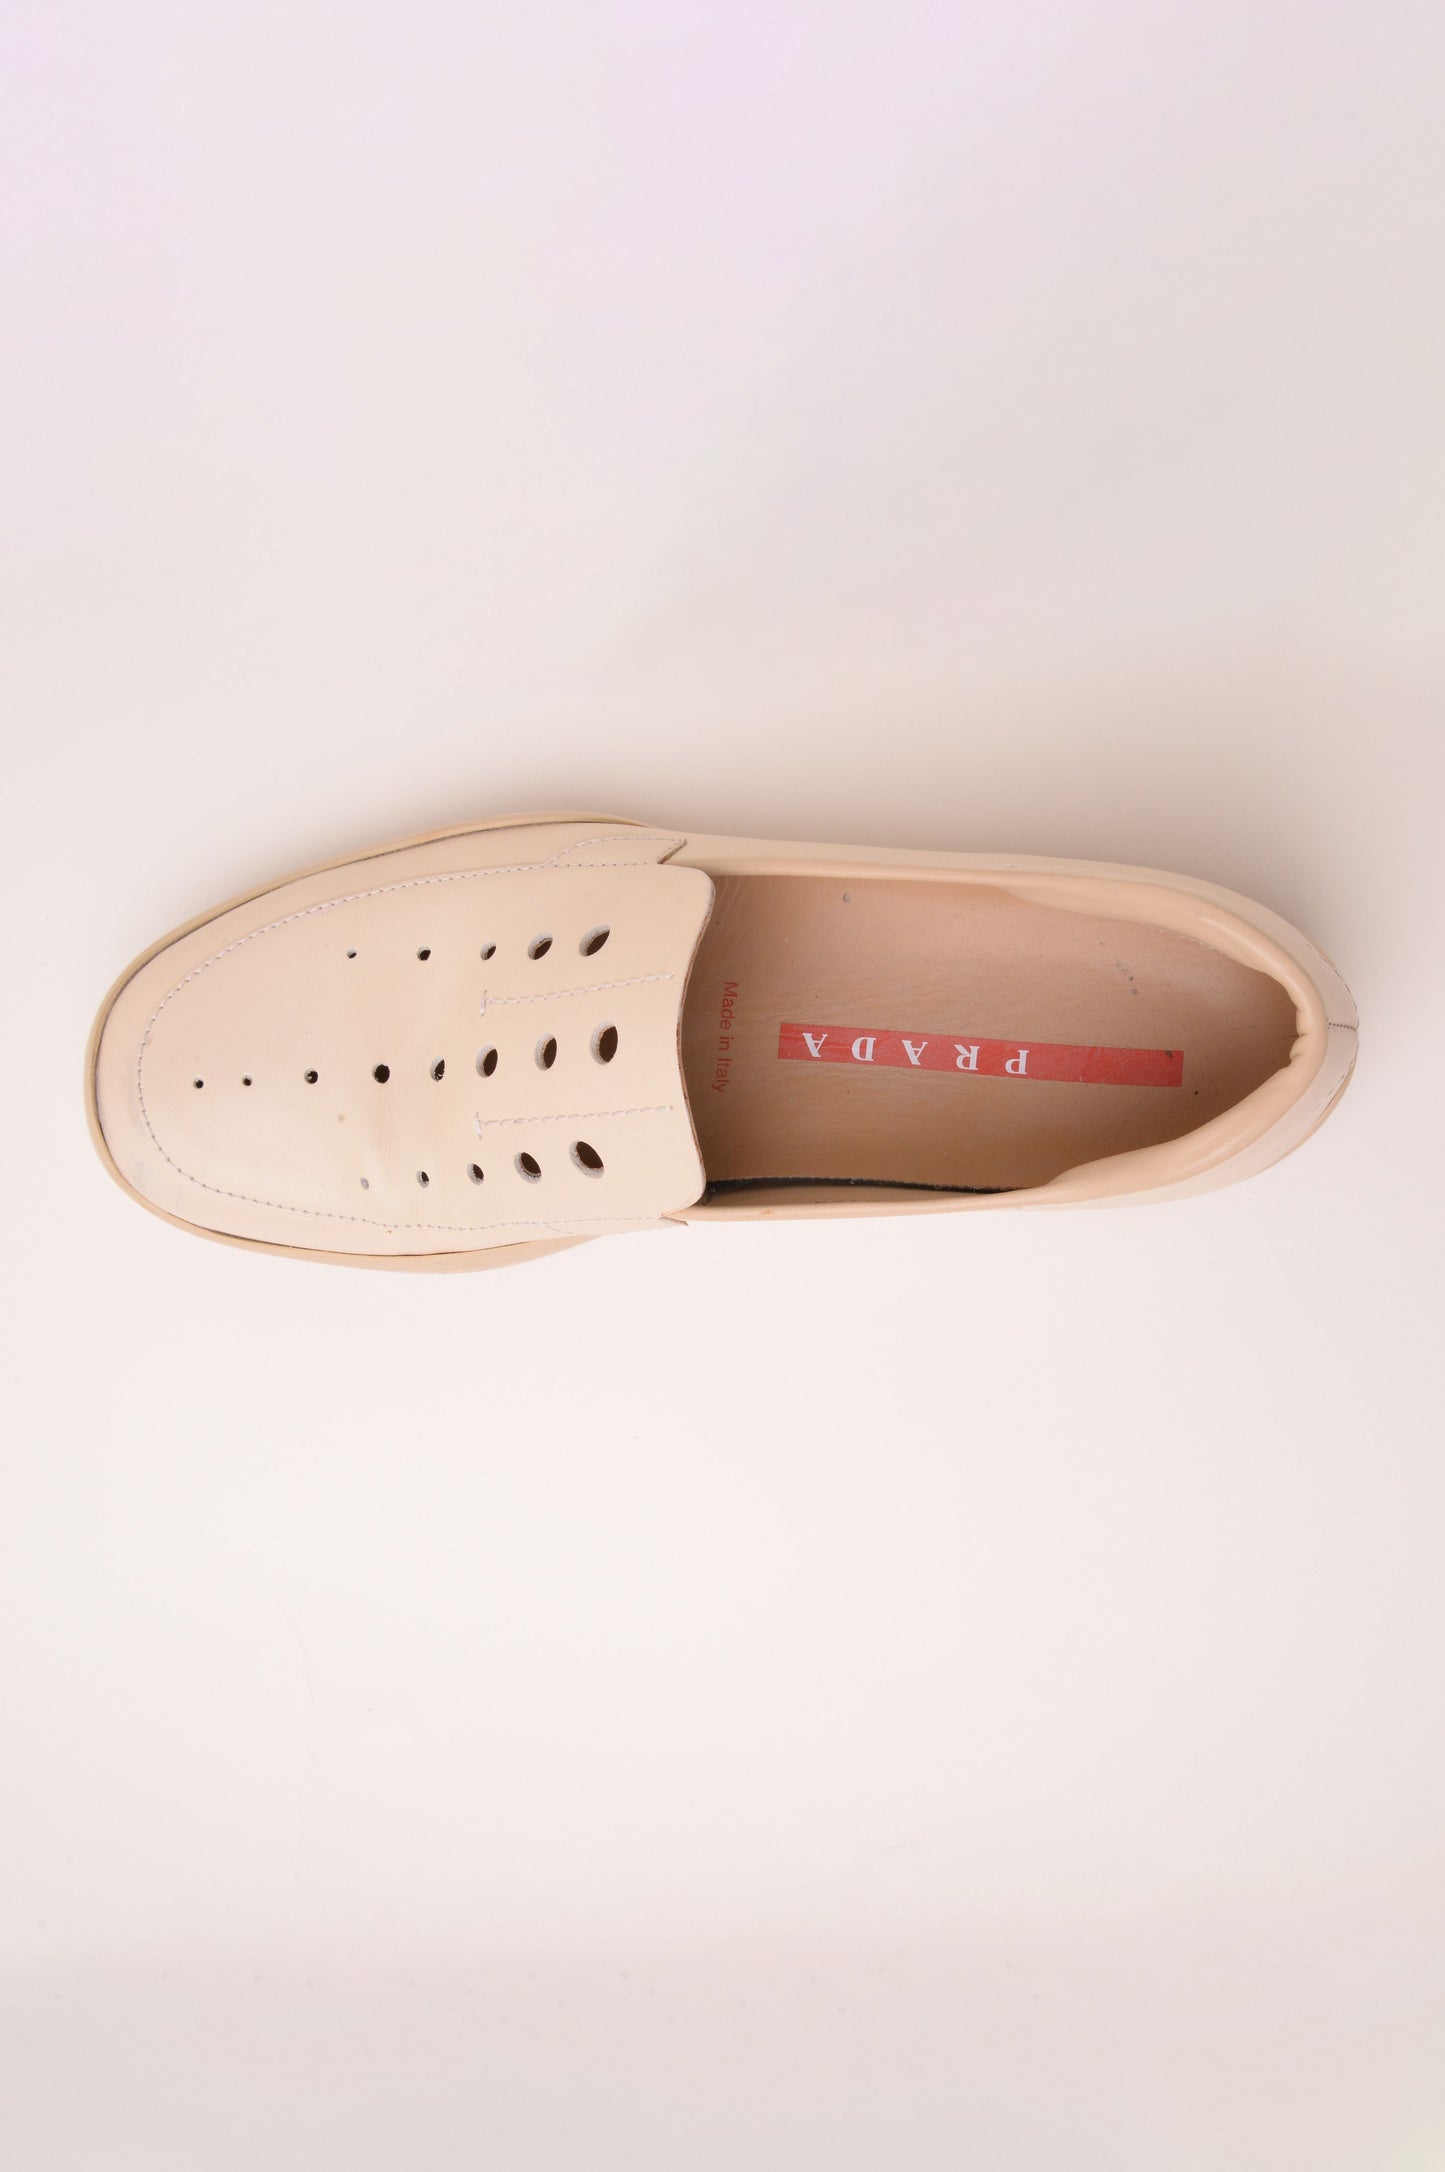 Prada Perforated Slip-On Sneakers